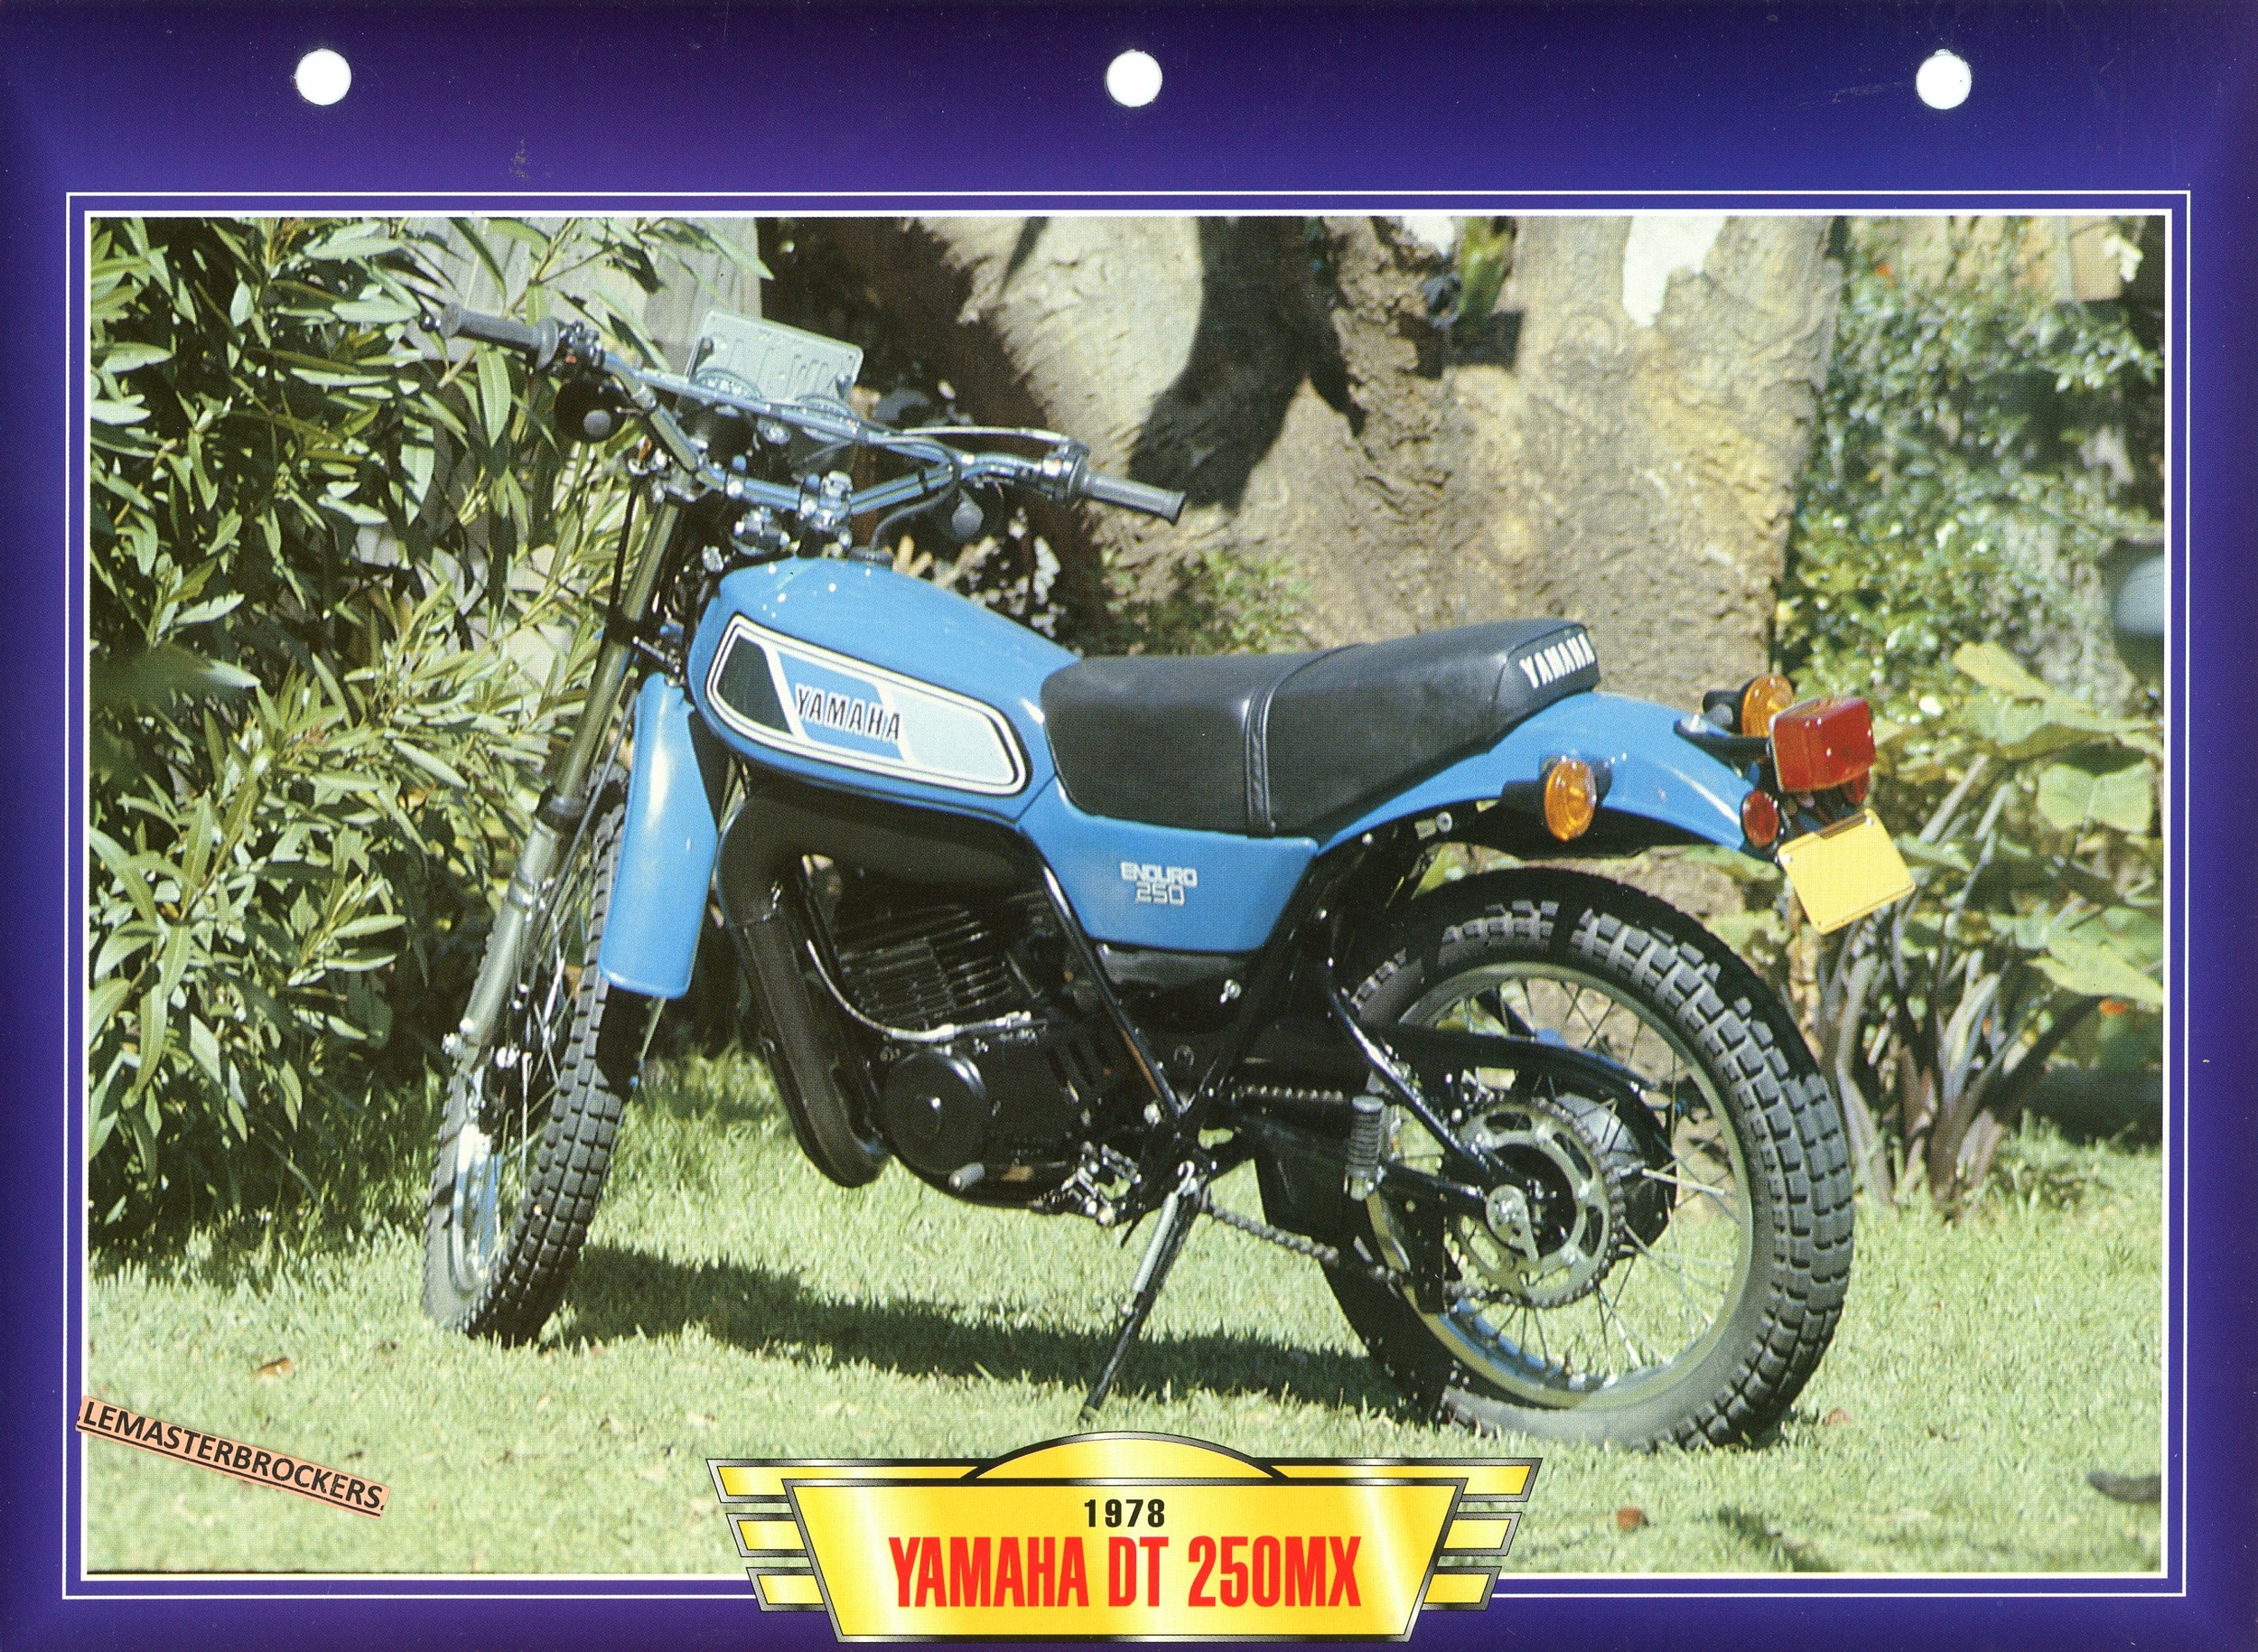 FICHE-MOTO-YAMAHA-DT250MX-1977-LEMASTERBROCKERS-CARS-MOTORCYCLES-ATLAS